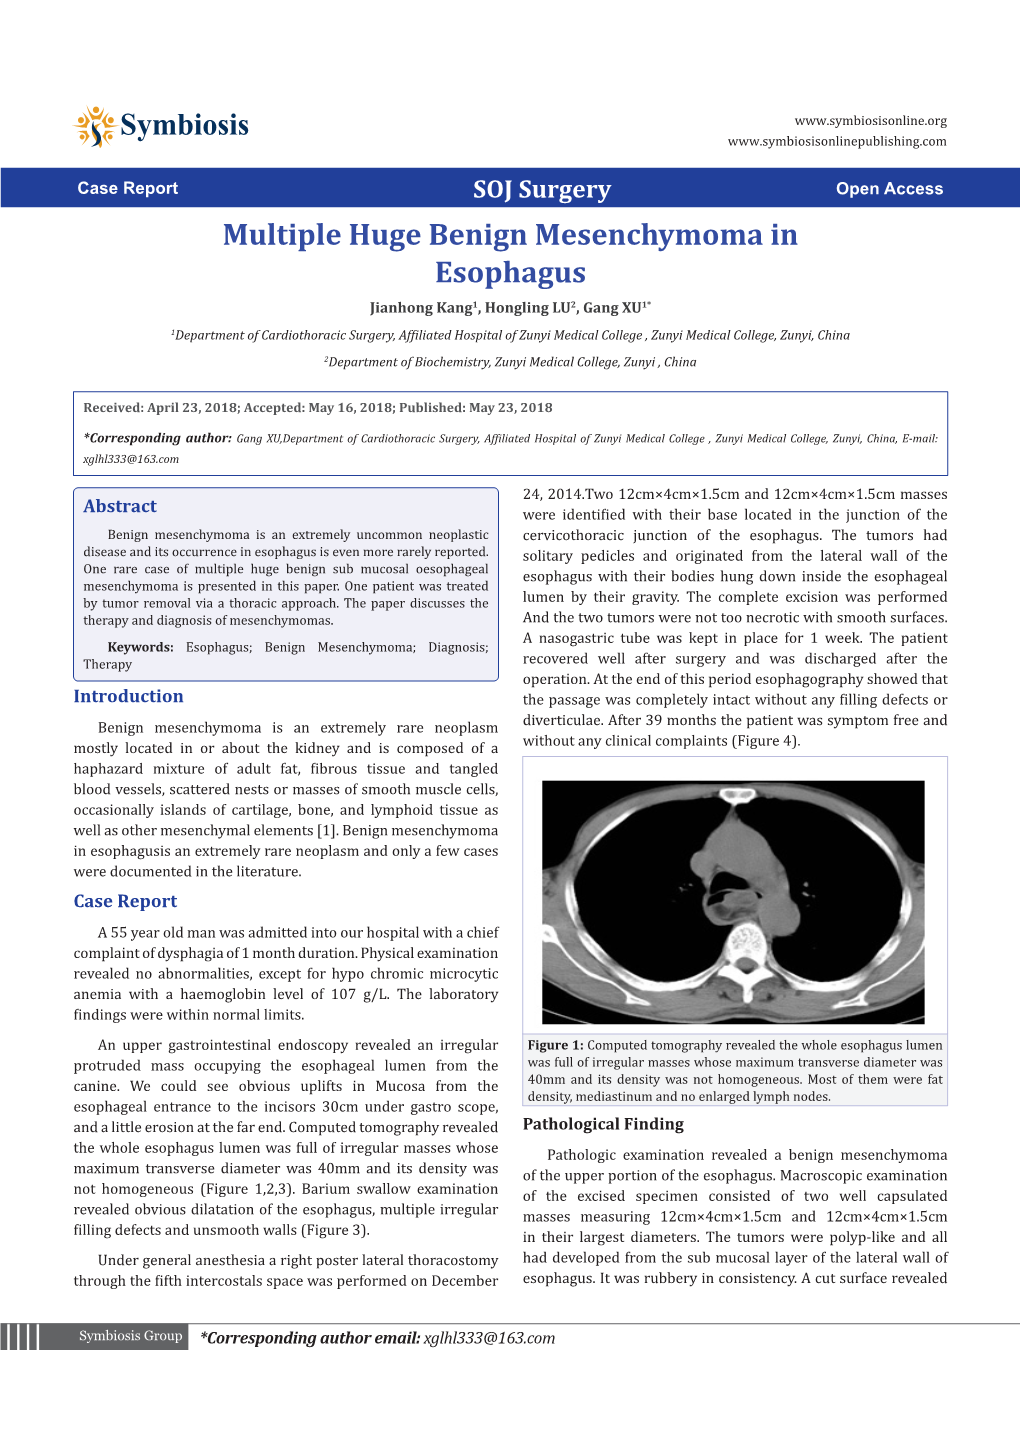 Multiple Huge Benign Mesenchymoma in Esophagus